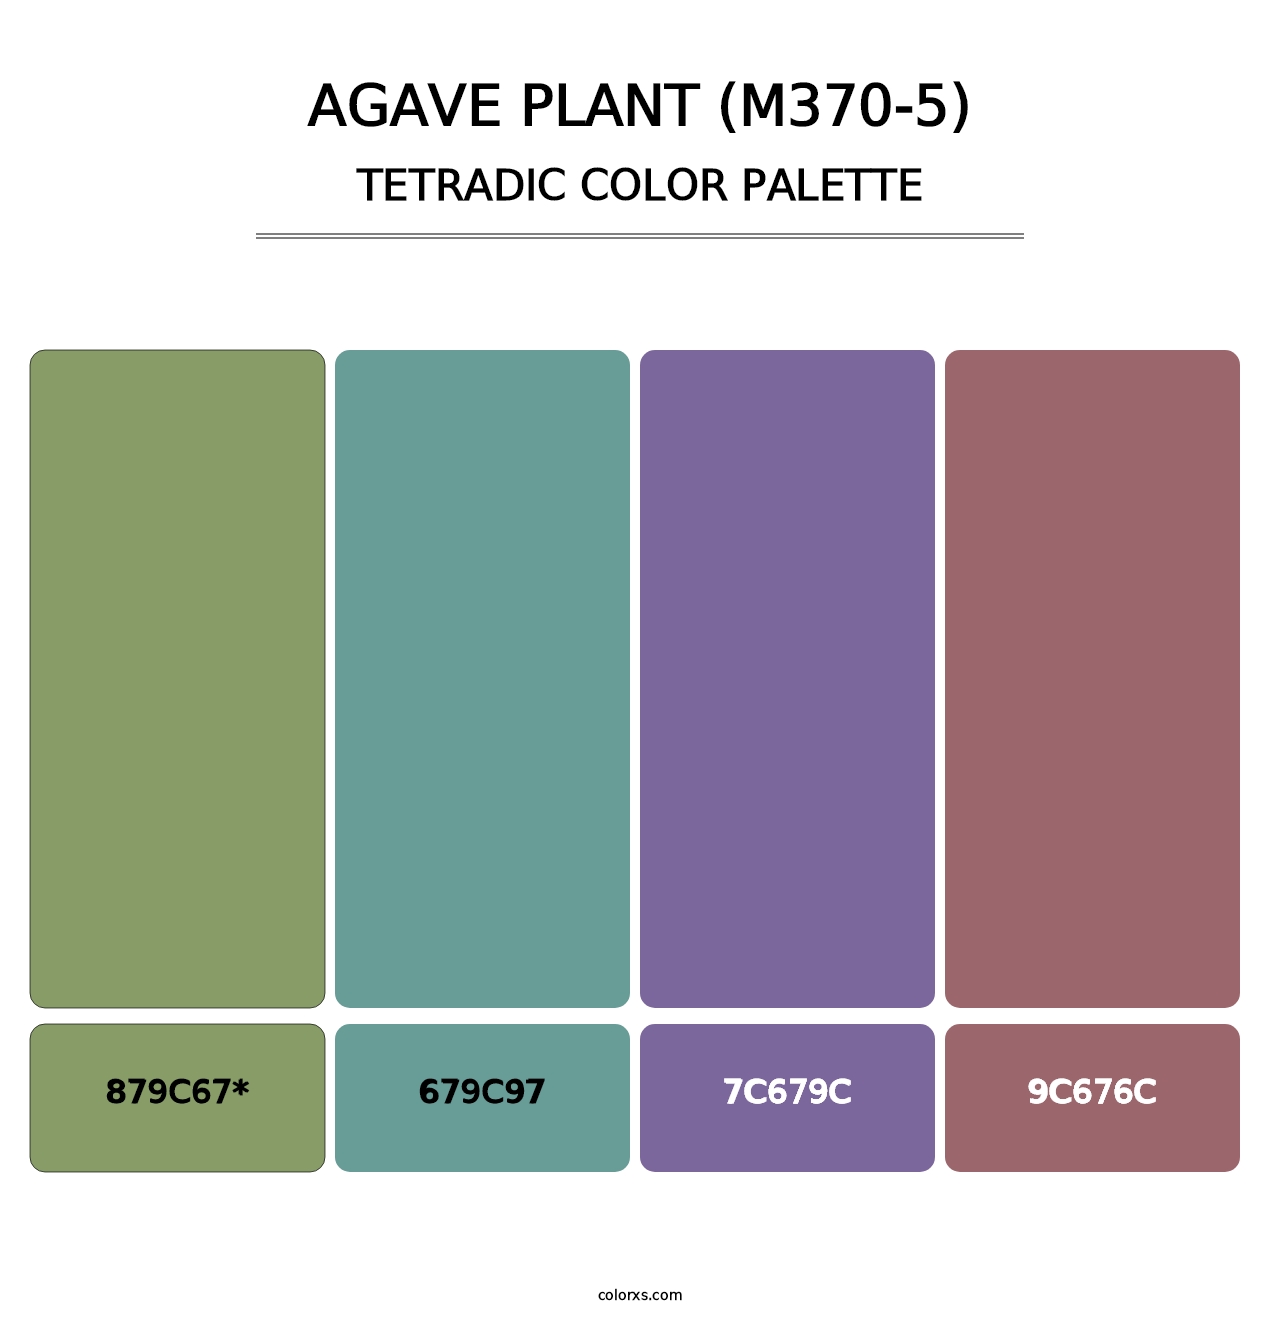 Agave Plant (M370-5) - Tetradic Color Palette